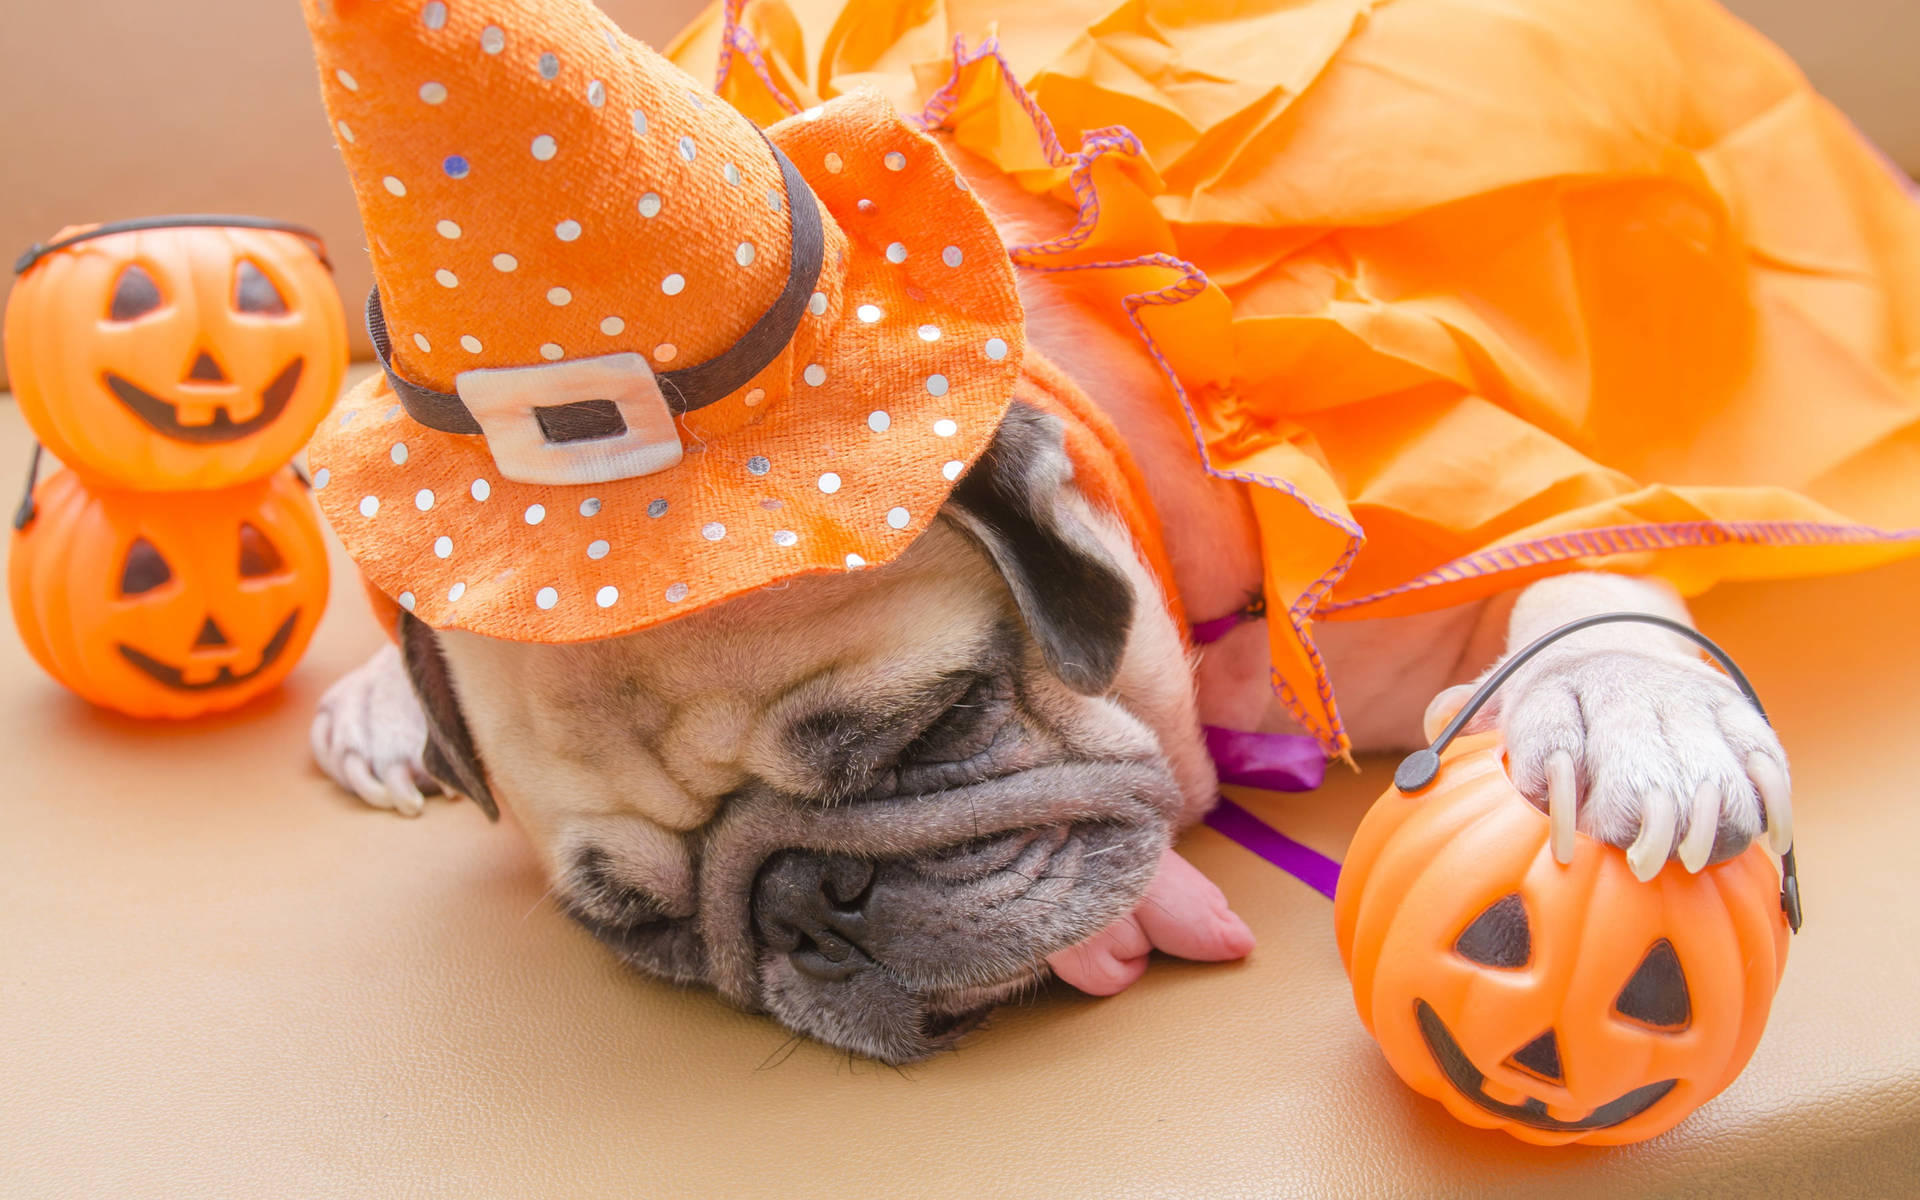 Caption: Adorable Halloween Desktop - Spooky Fun Awaits